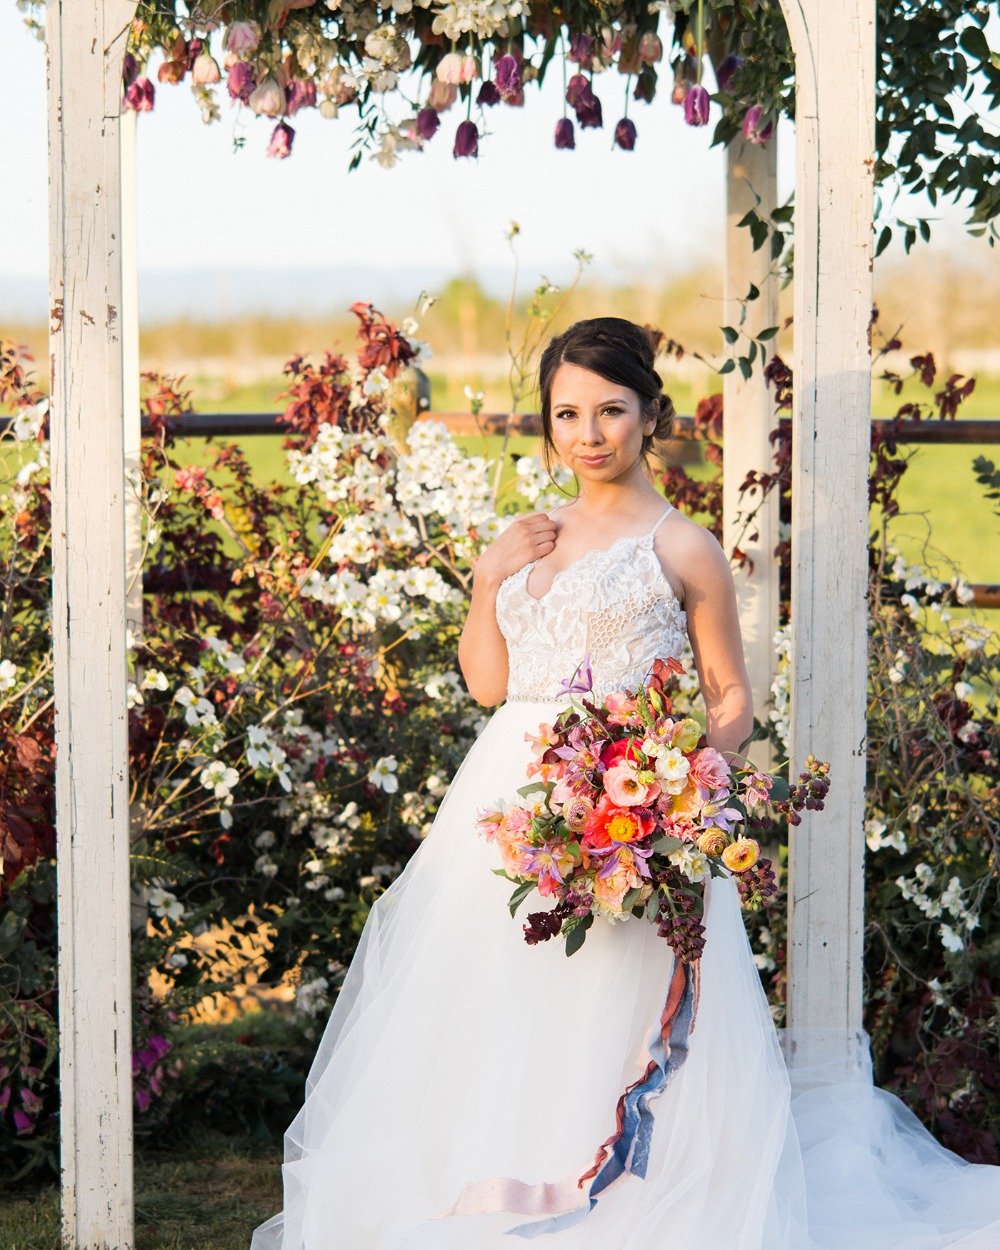 romantic wedding backdrop flower arch